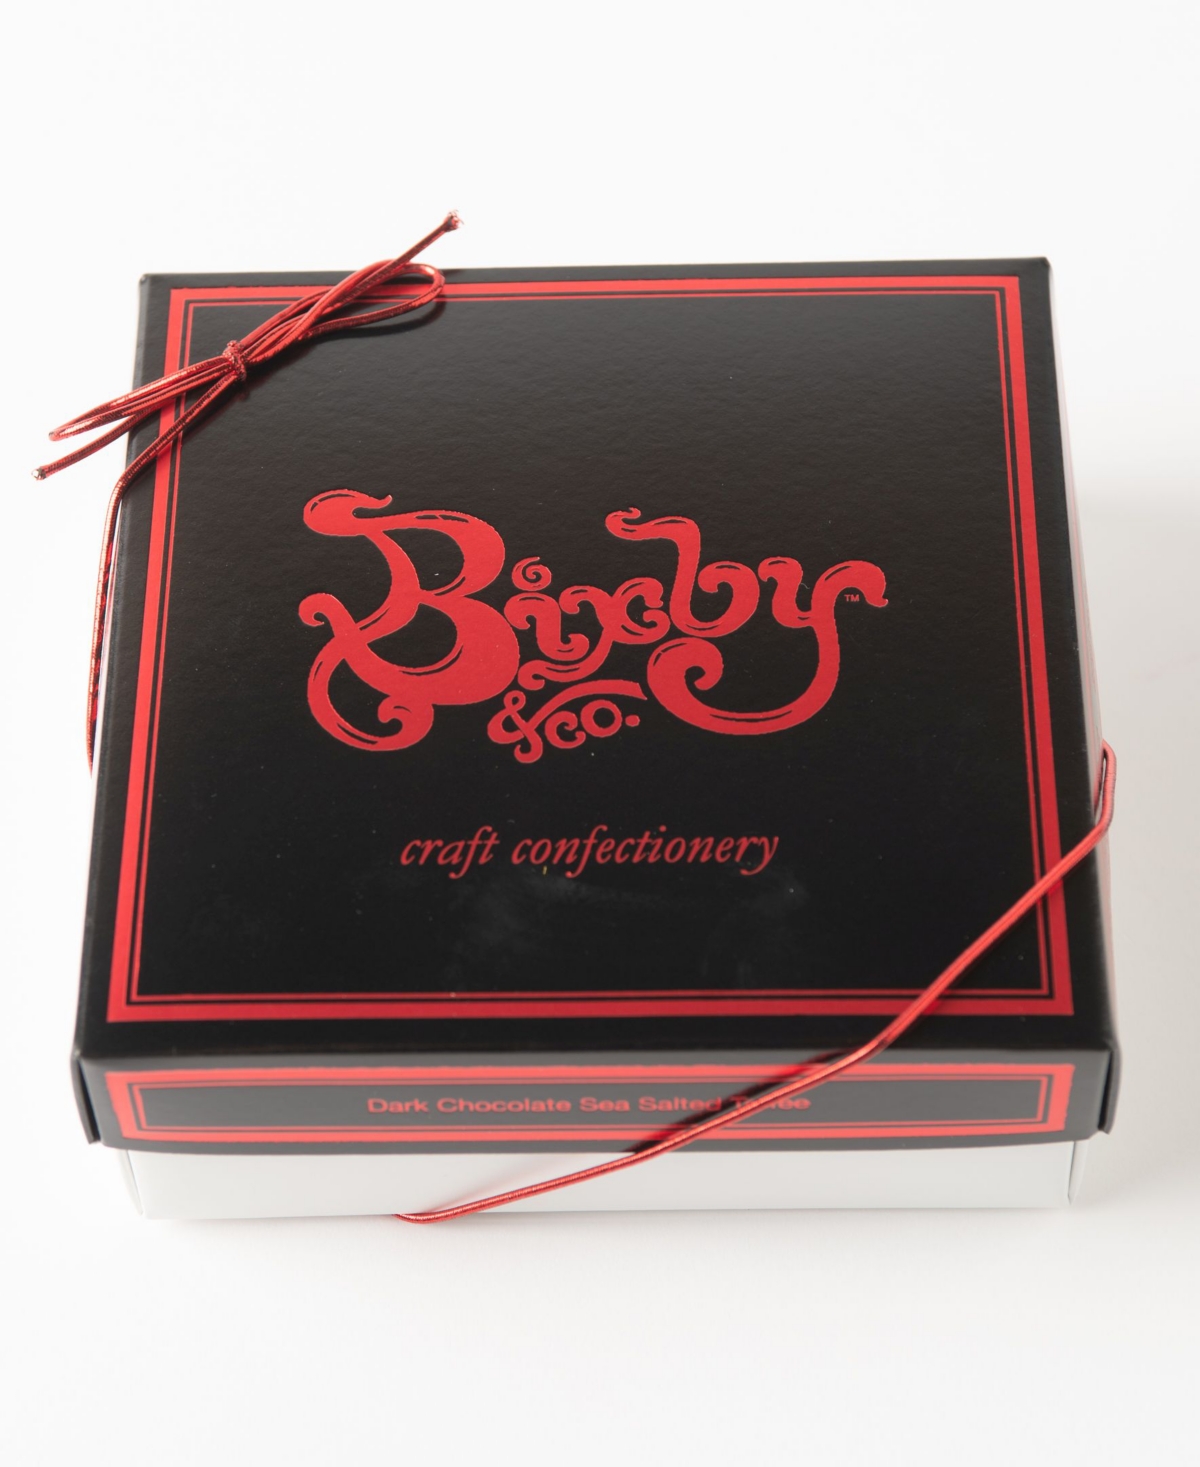 Bixby Chocolate Dark Chocolate Sea Salted Toffee Gift Box, 1 Lb